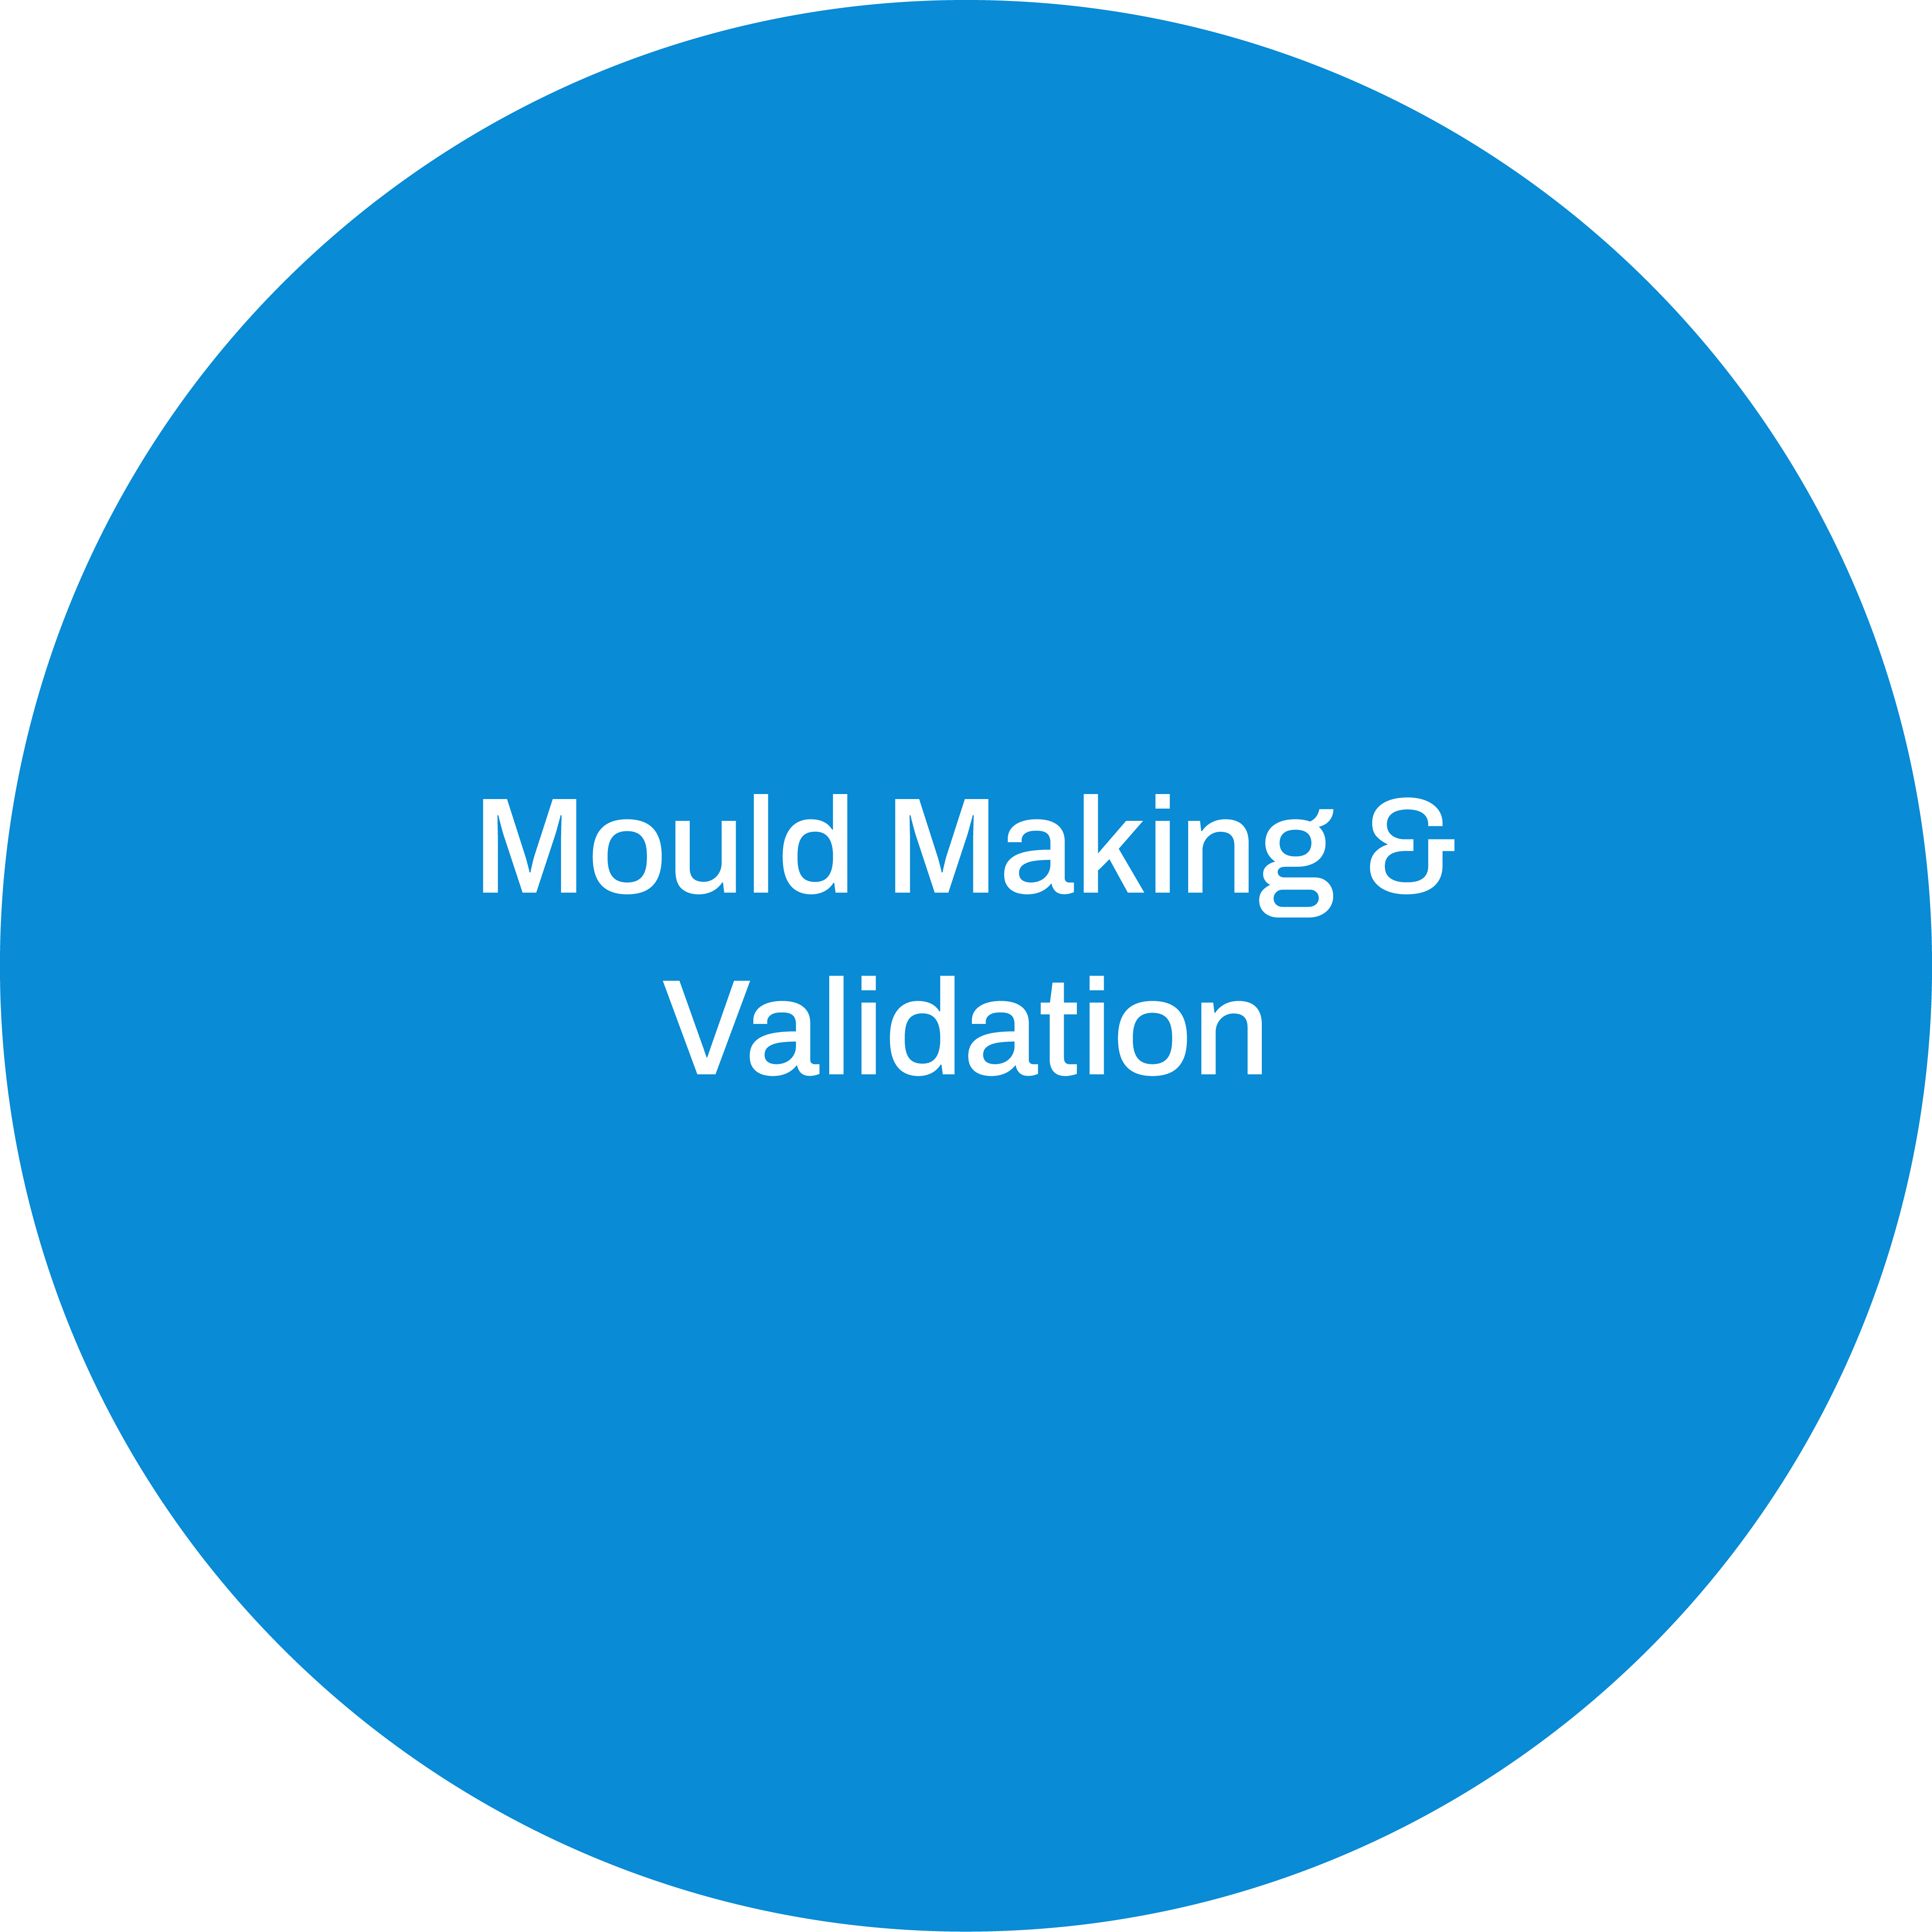 mould making & validation graphic illustration